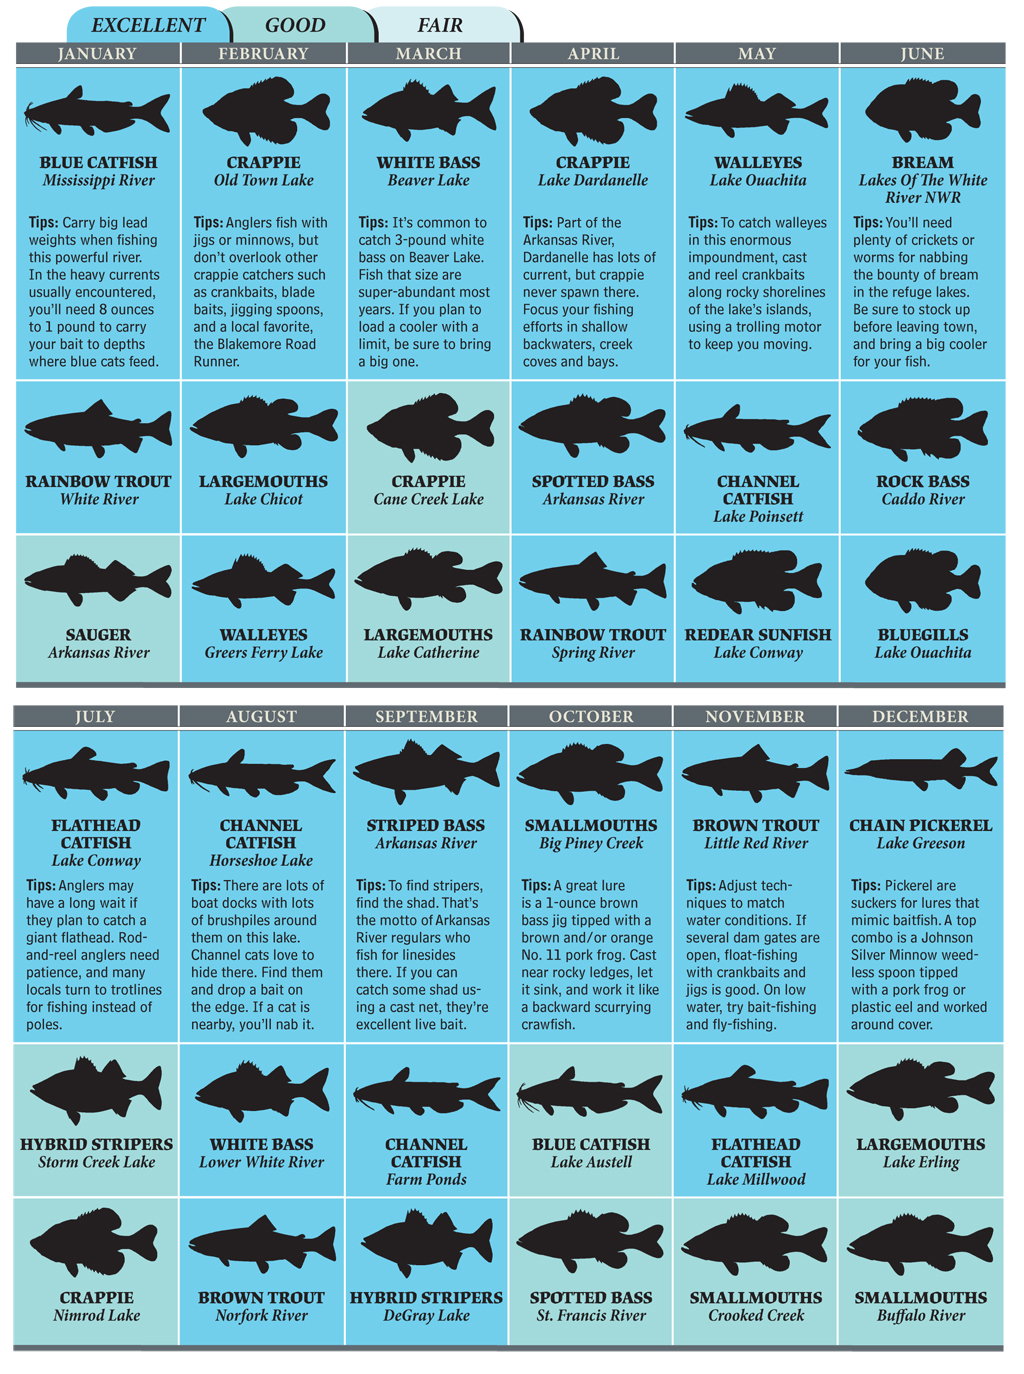 Top Spots for Arkansas Fishing in 2012